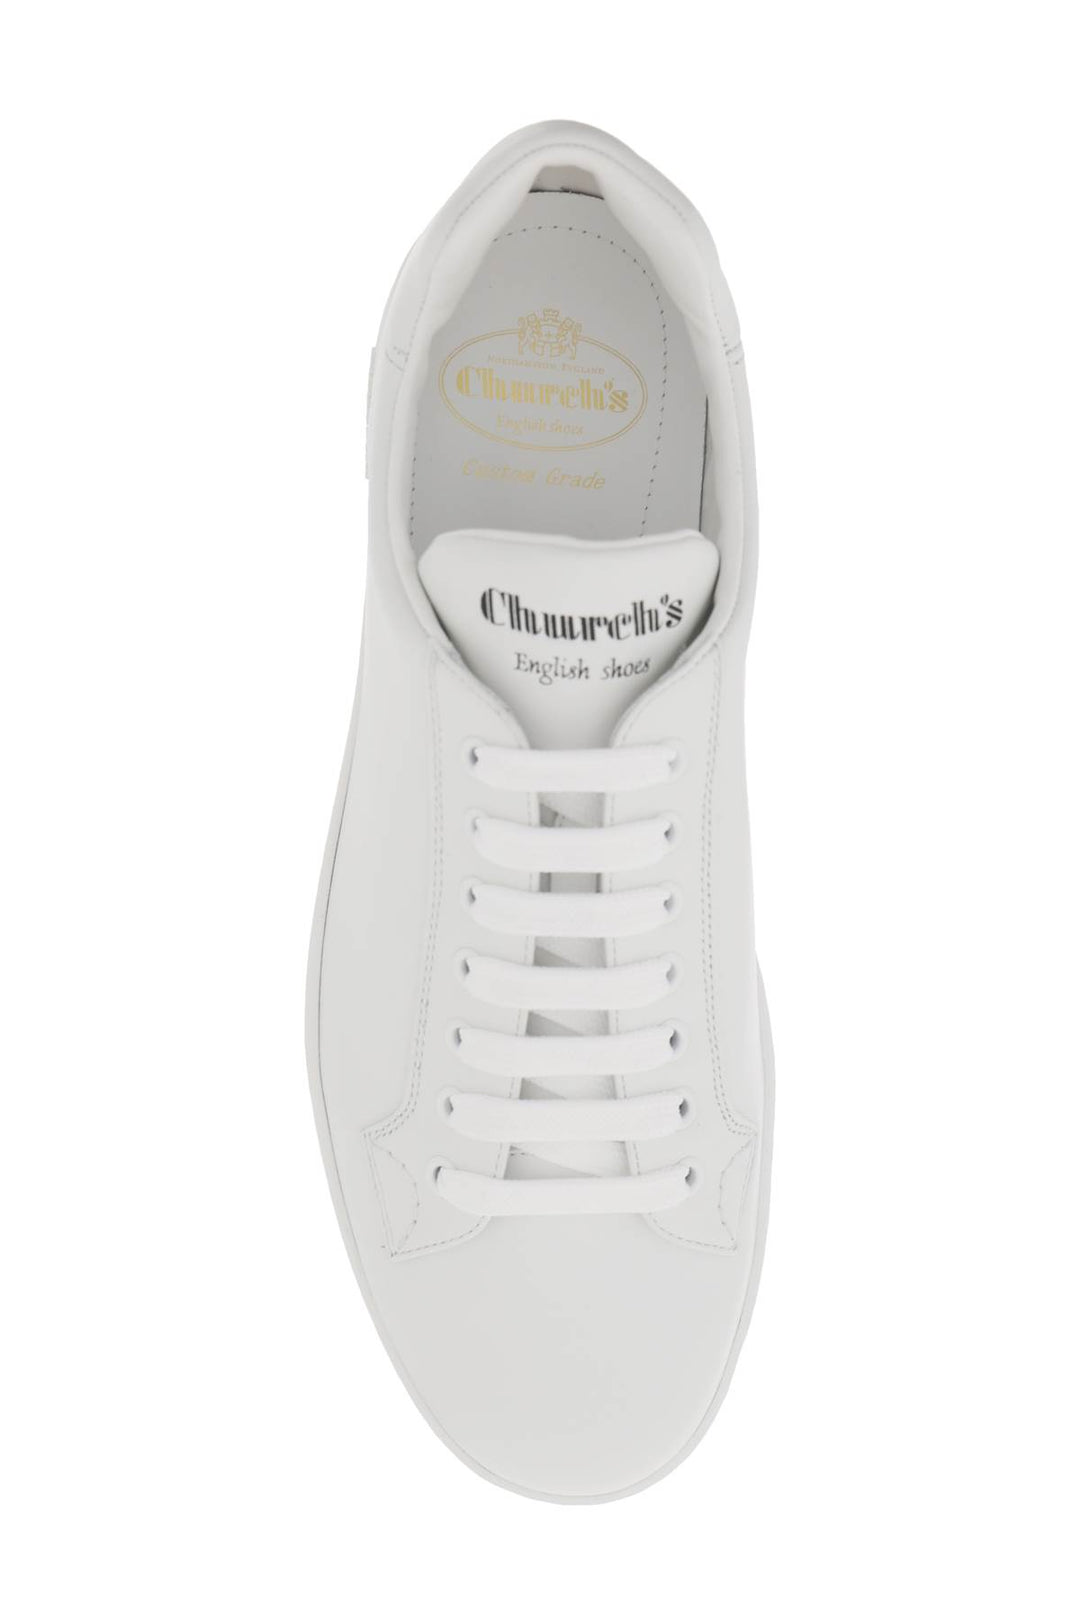 Church's Ludlow Sneakers   Bianco